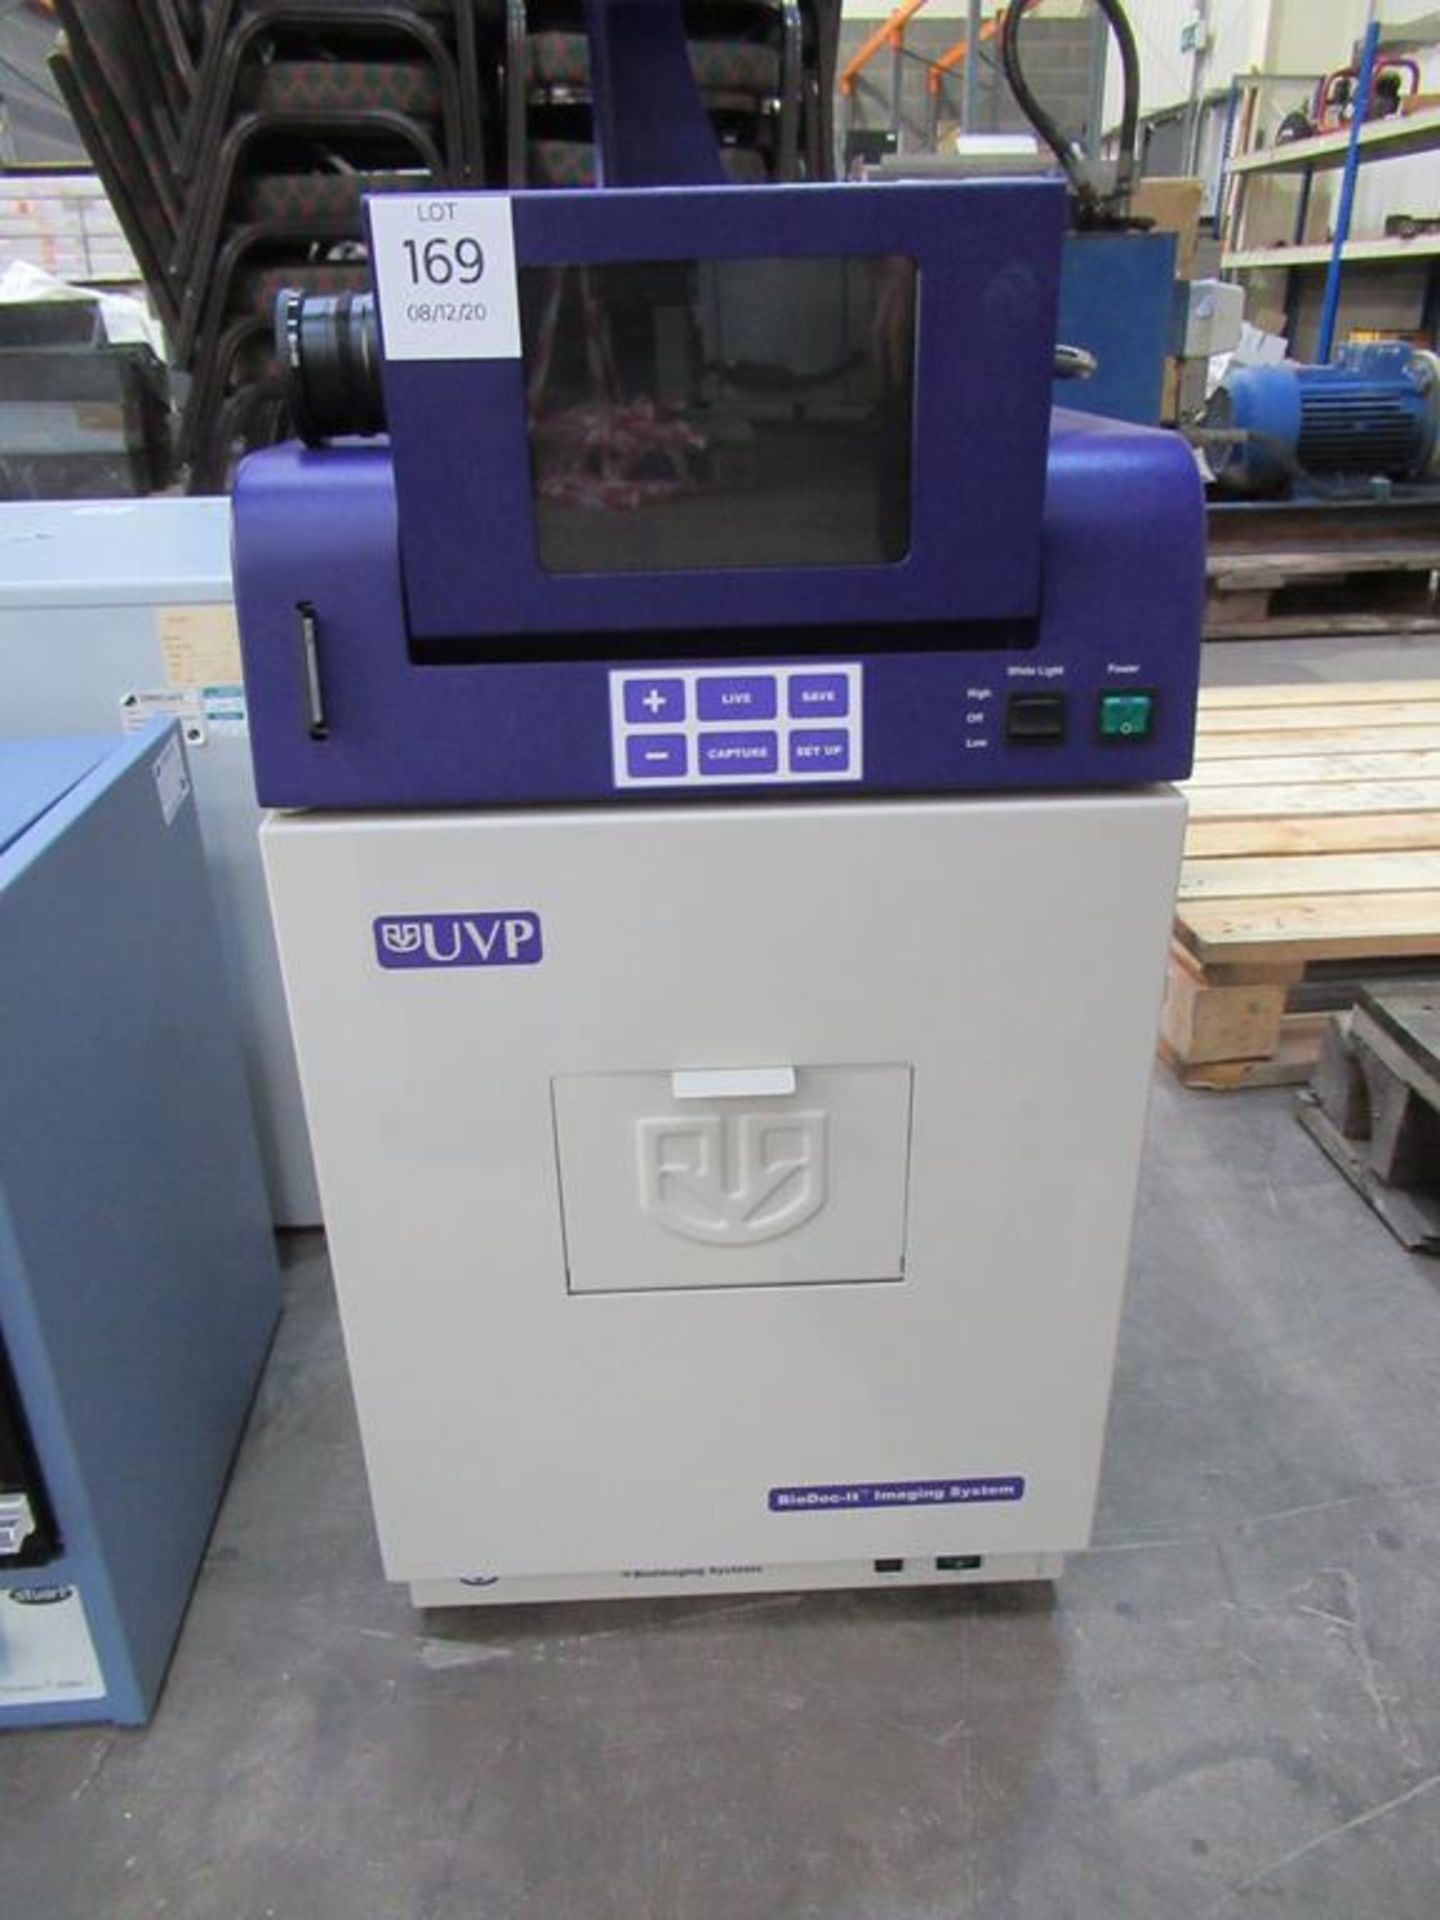 UVP BioDoc-It imaging system s/n 020205-001